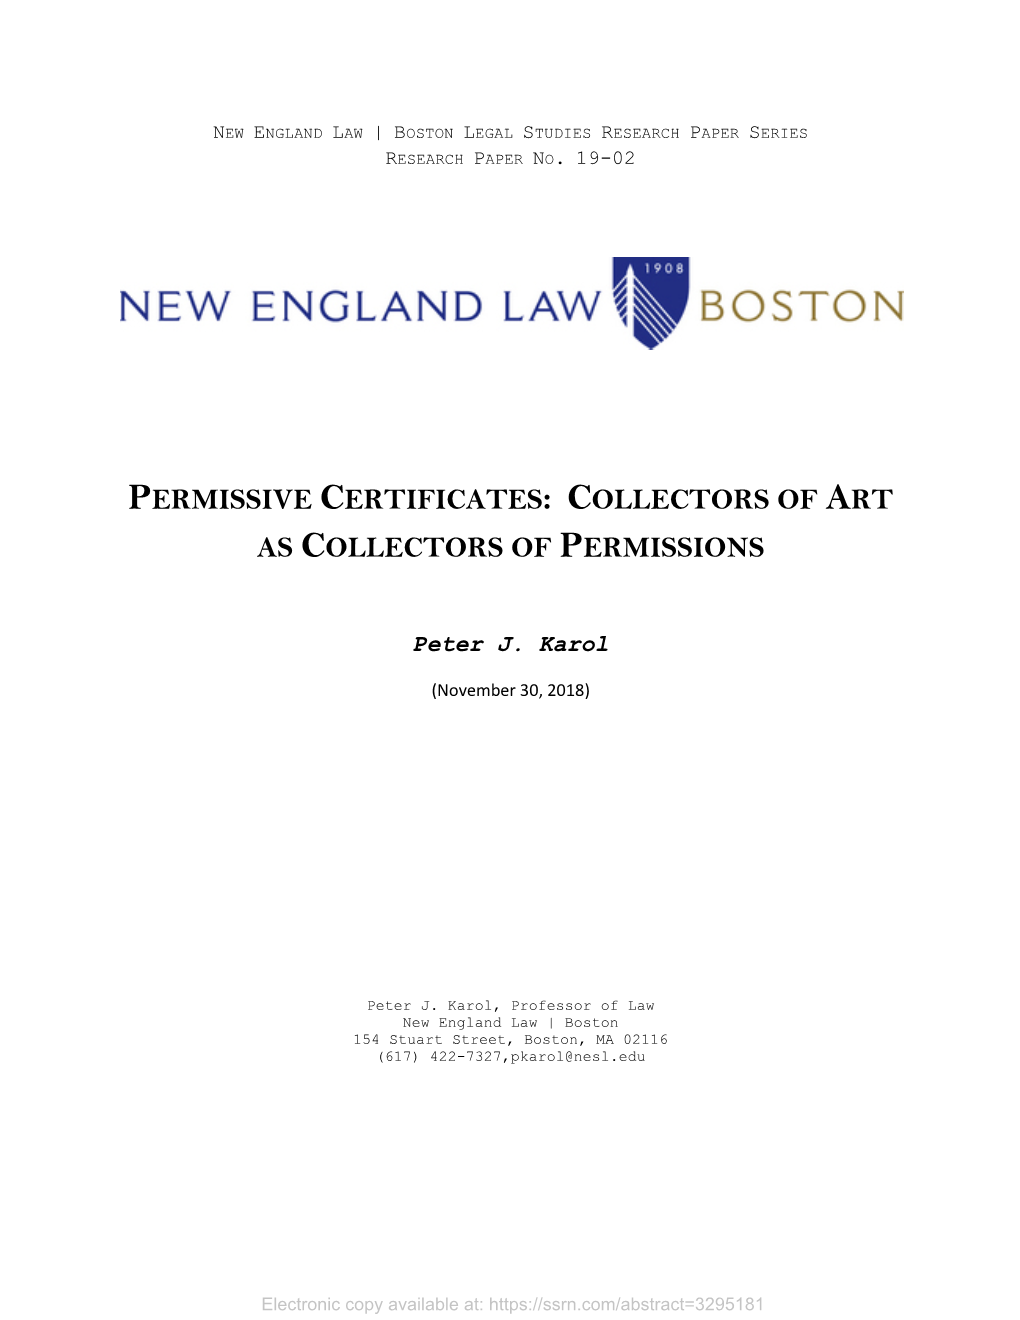 Permissive Certificates: Collectors of Art As Collectors of Permissions